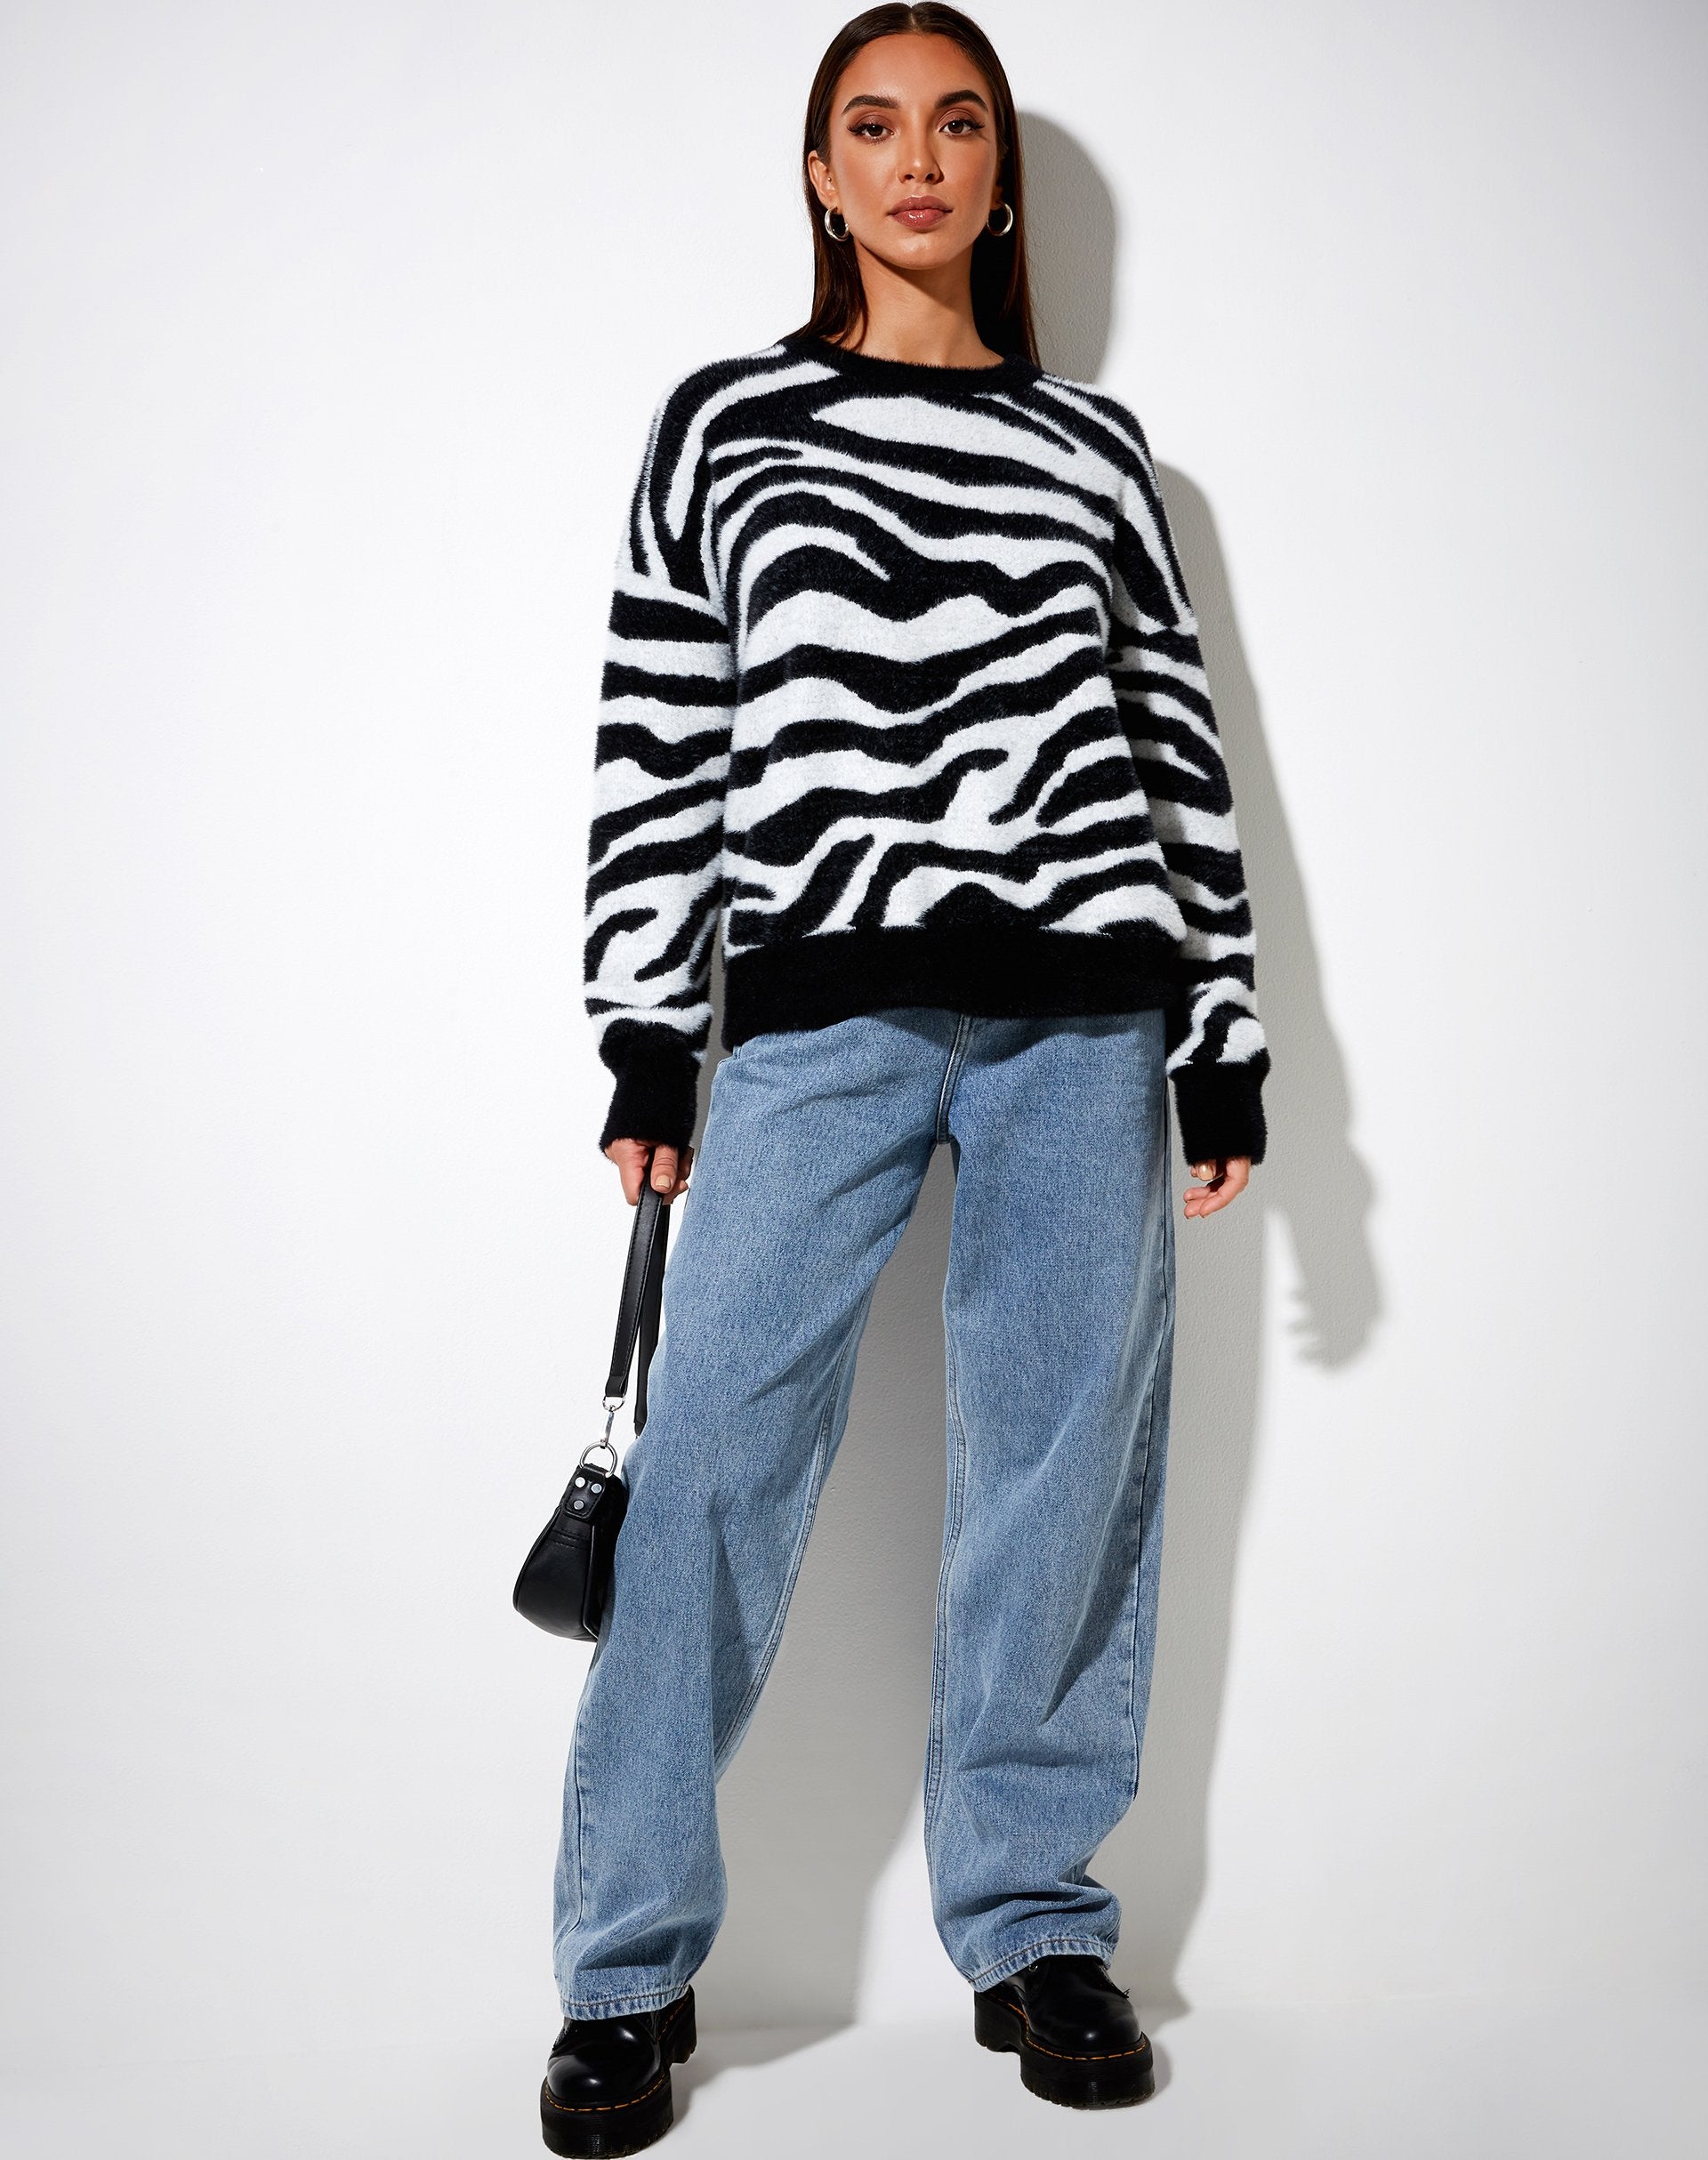 Image of Eleni Jumper in Knit Zebra Black and White